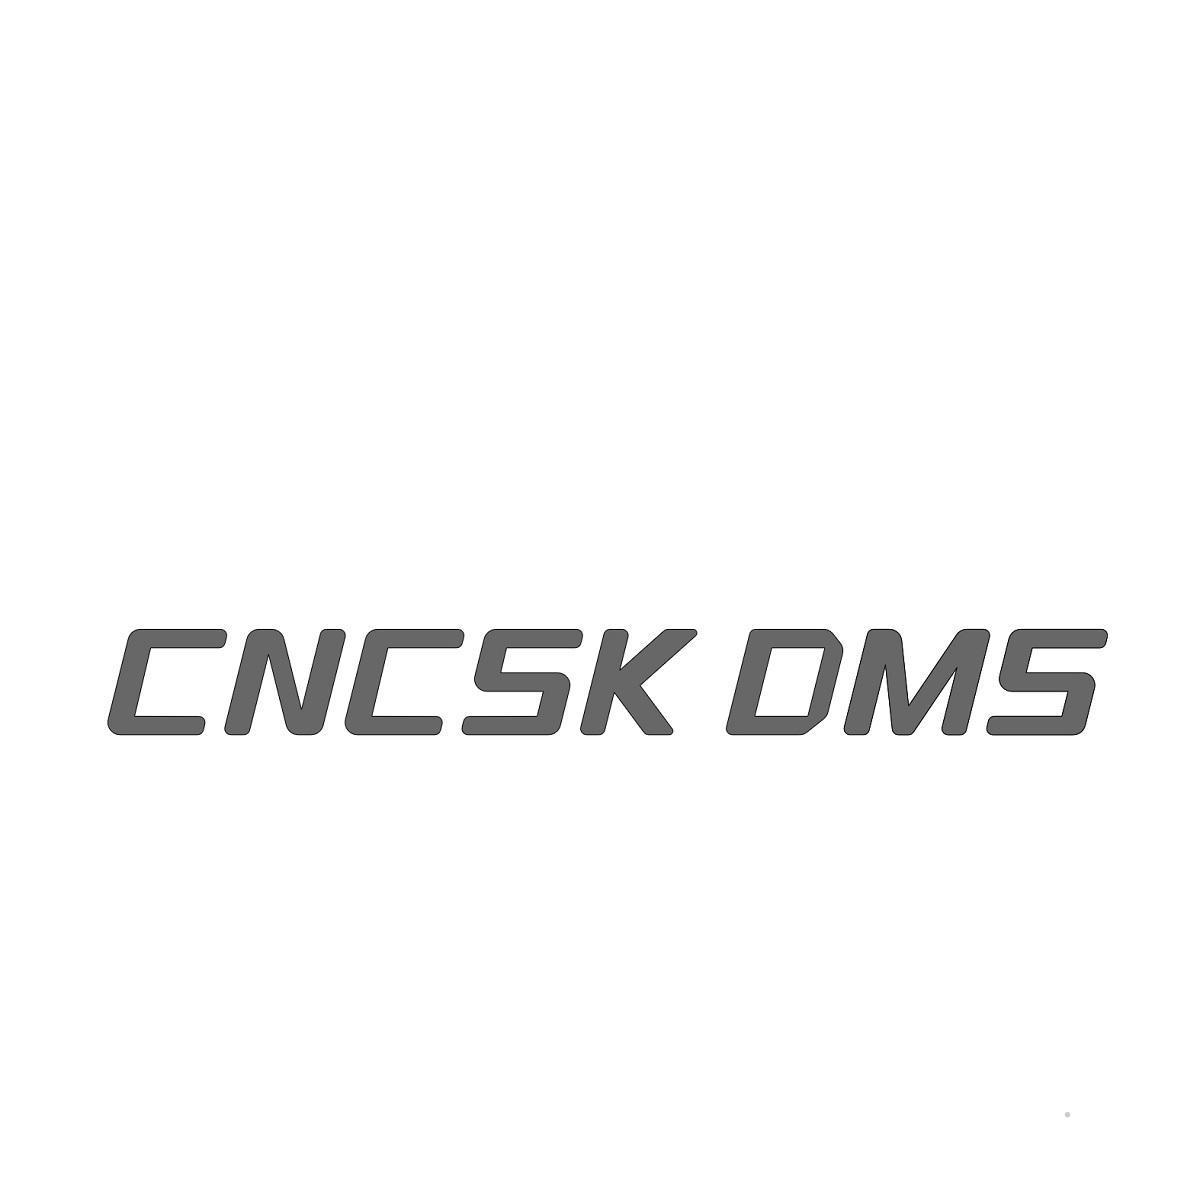 CNCSK DMS